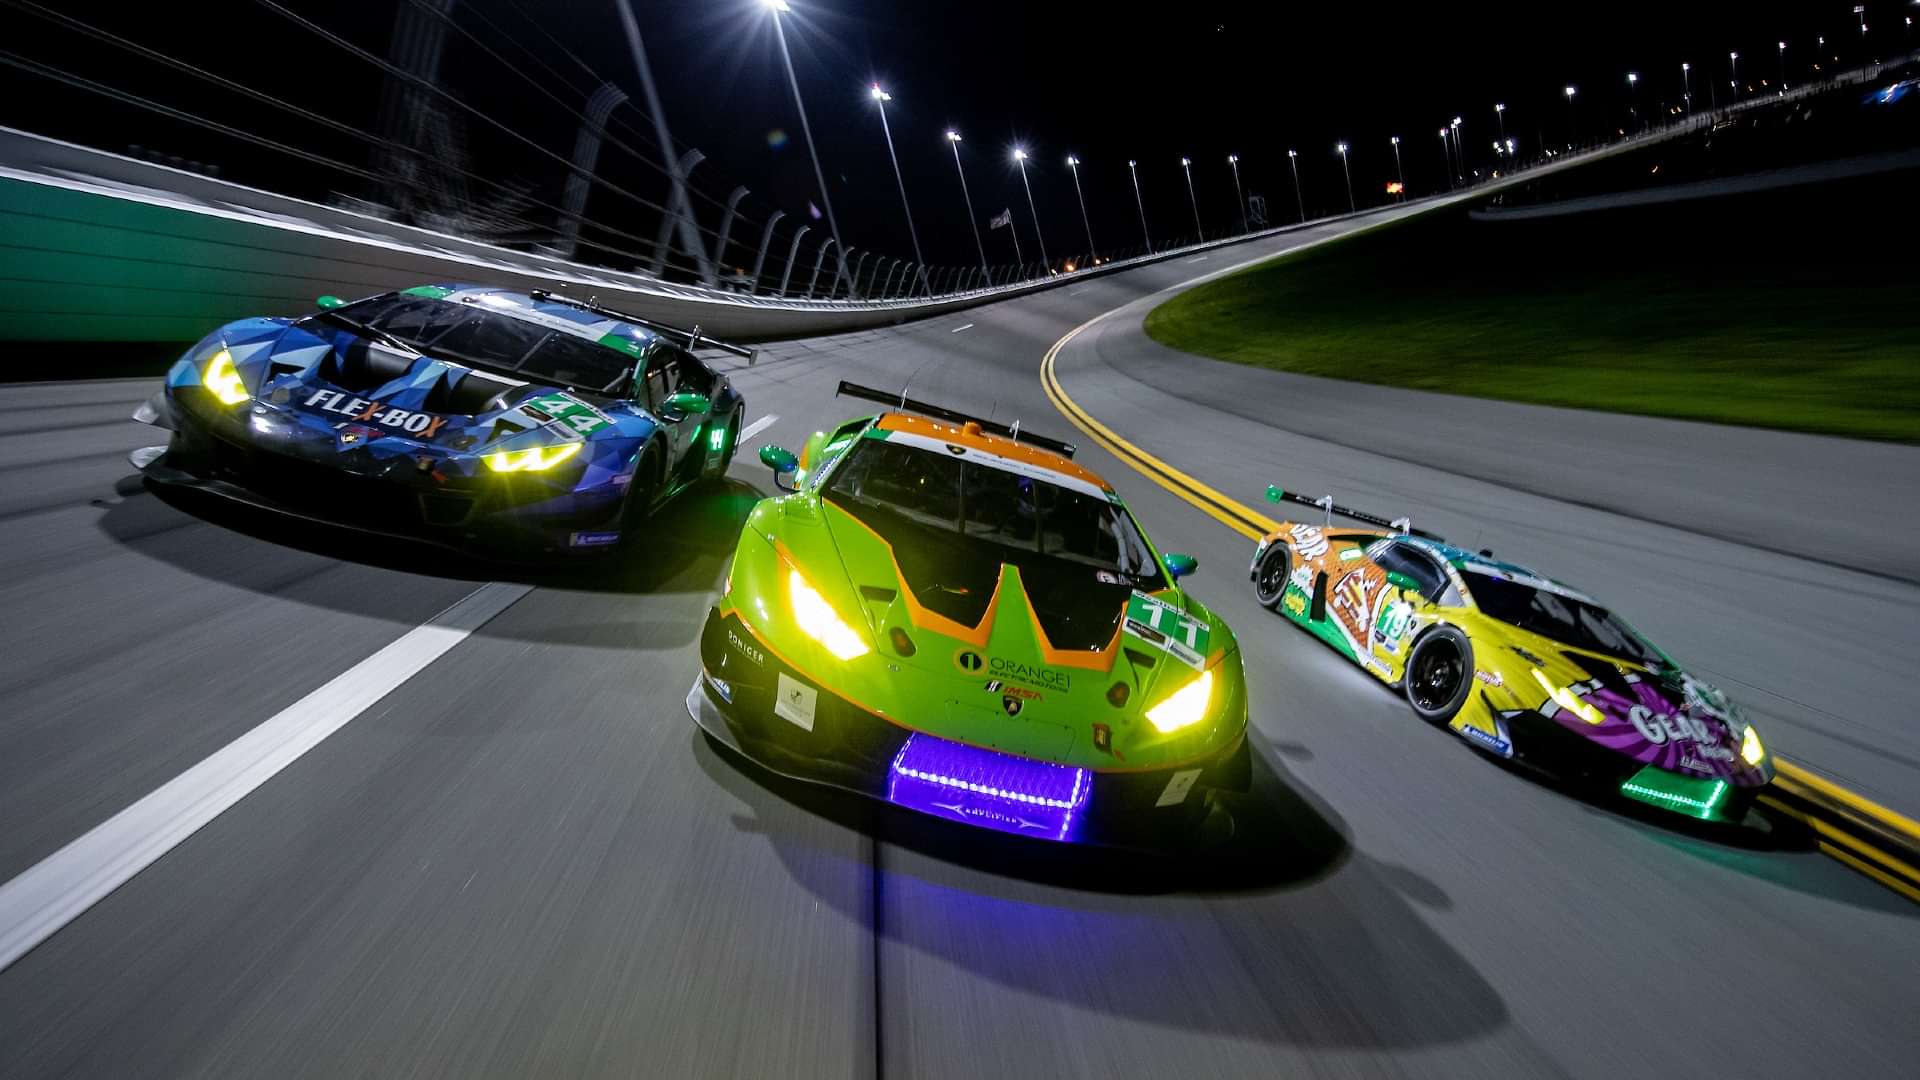 5 Car Racing Games at Poki Games 2023, Makes It Exciting!